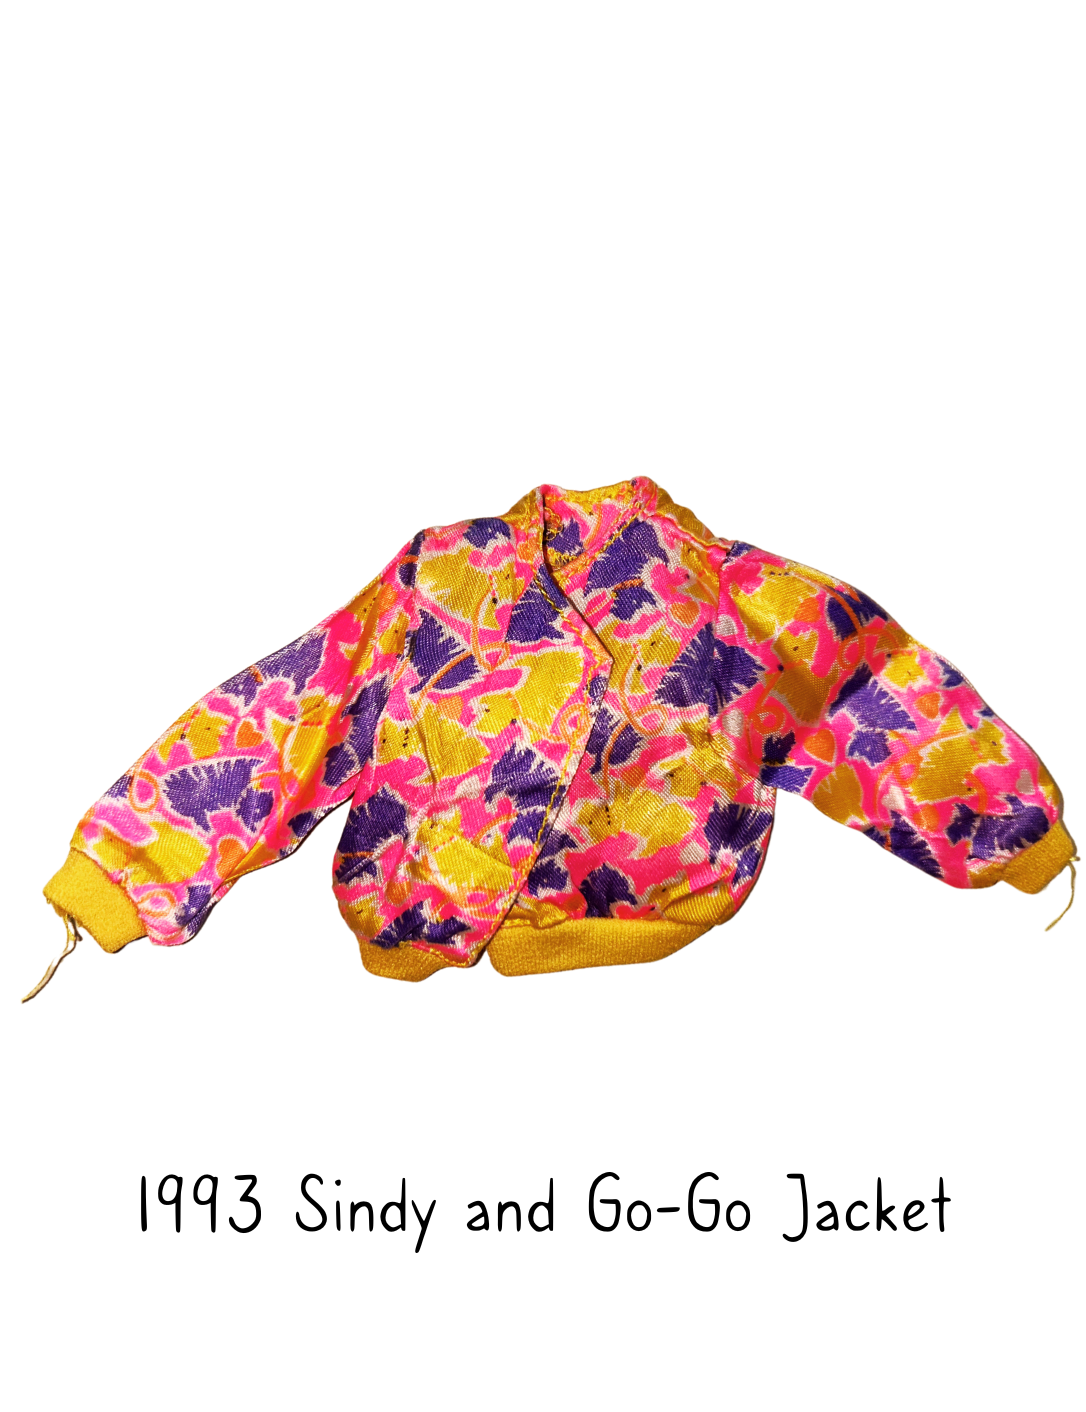 1993 Hasbro Sindy and Go-Go Doll Jacket